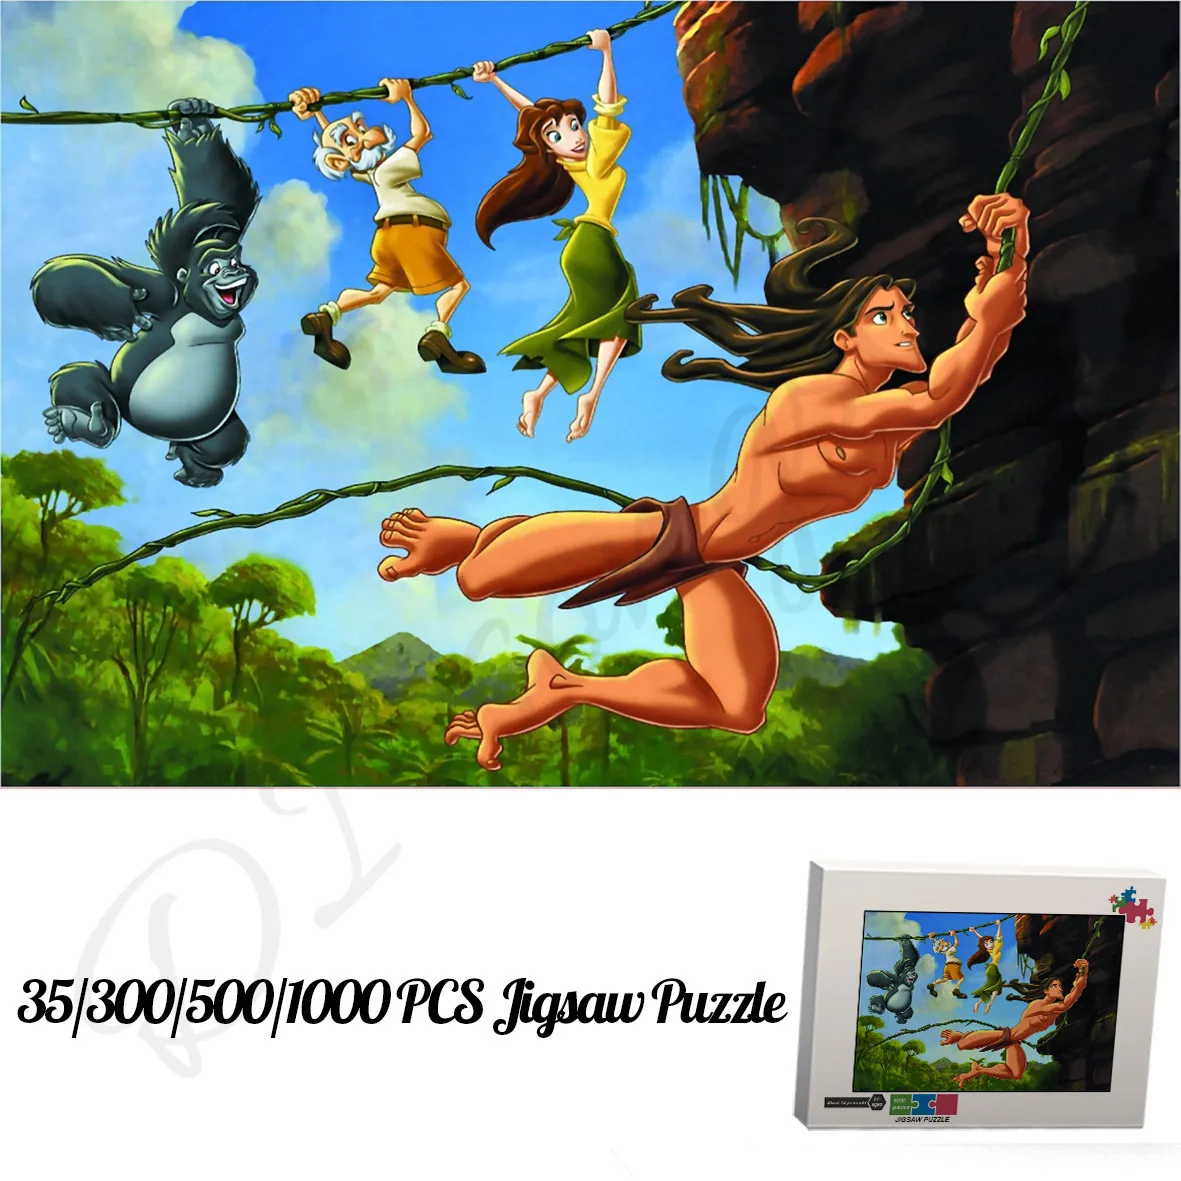 Disney 35 300 500 1000 Pieces of Wooden Jigsaw Puzzles Classic Cartoon Animation Tarzan & Jane Puzzles Educational Toys Hobbies